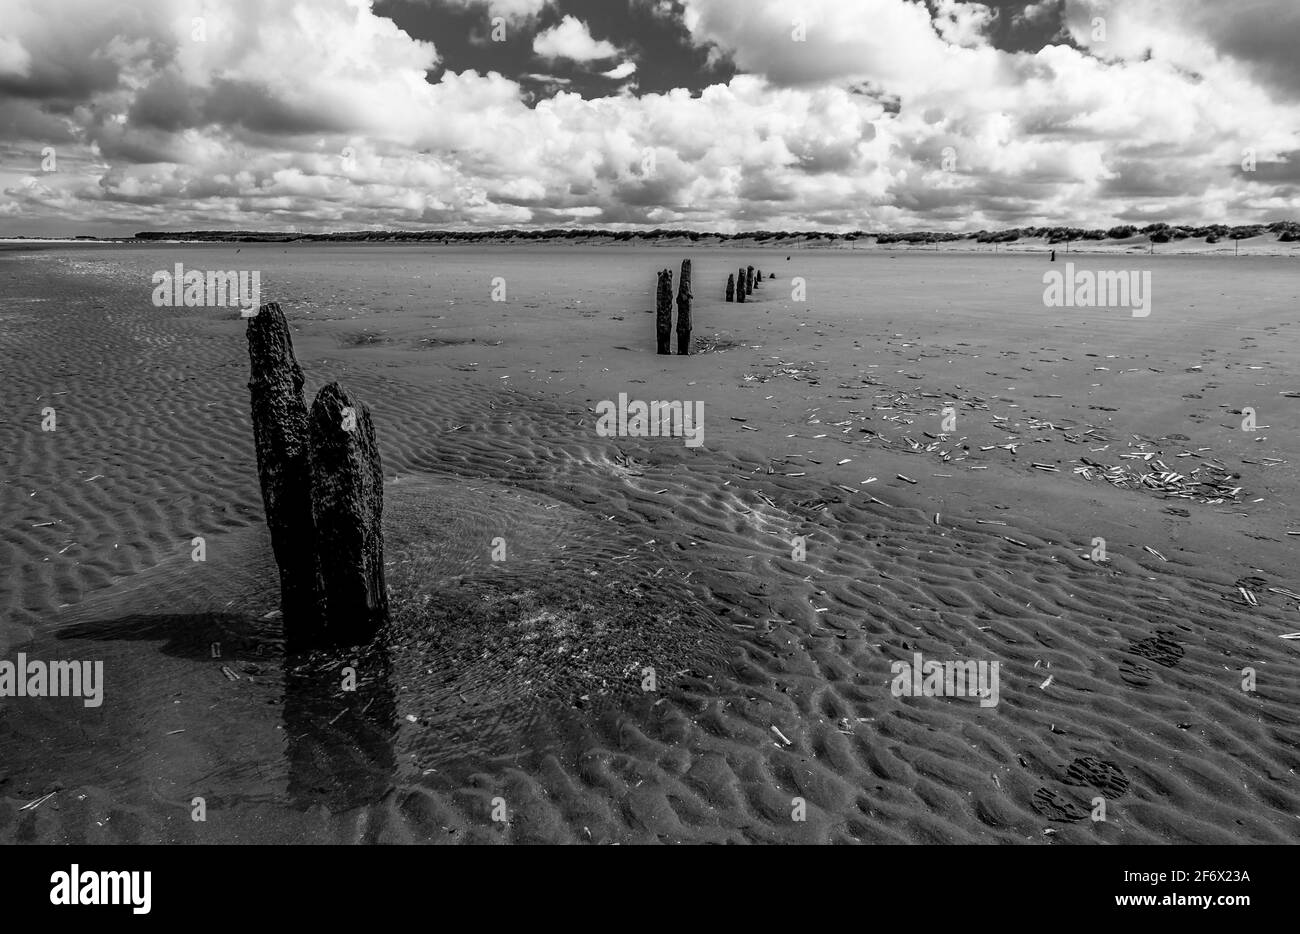 Rotten wooden piles / groynes in rippling sand on the beach near Brancaster / RSPB Titchwell Marsh, Norfolk, UK. B&W Stock Photo